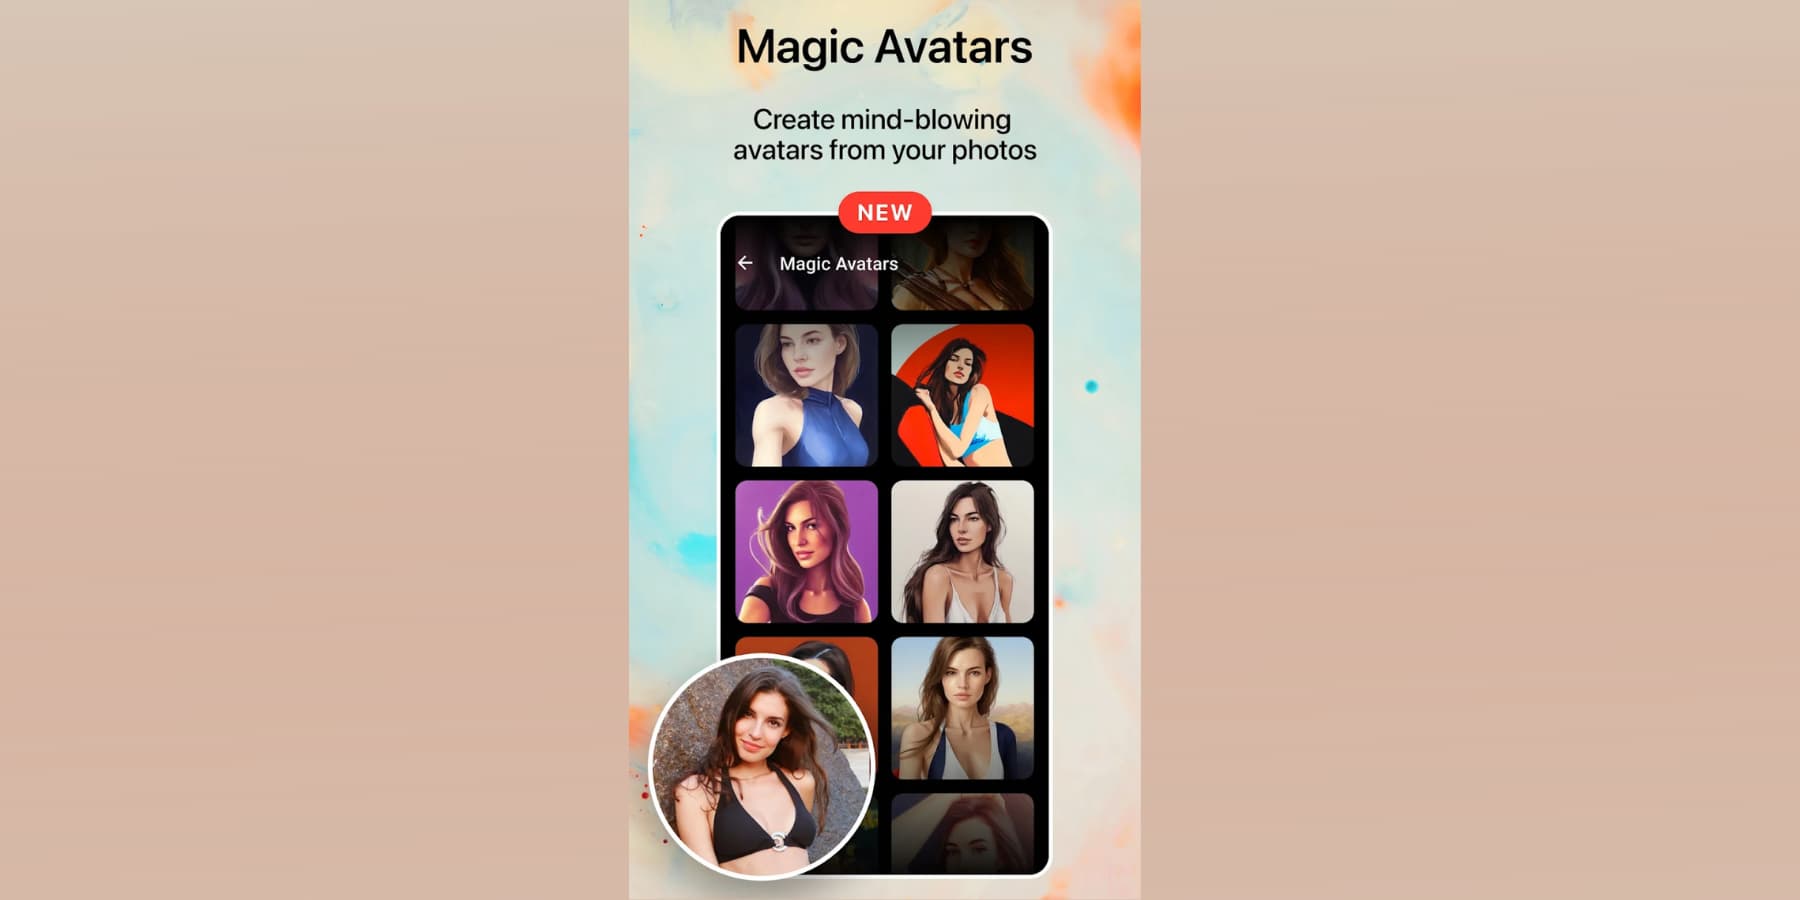 A screenshot of Lensa AI's Magic Avatars feature from Google Play Store